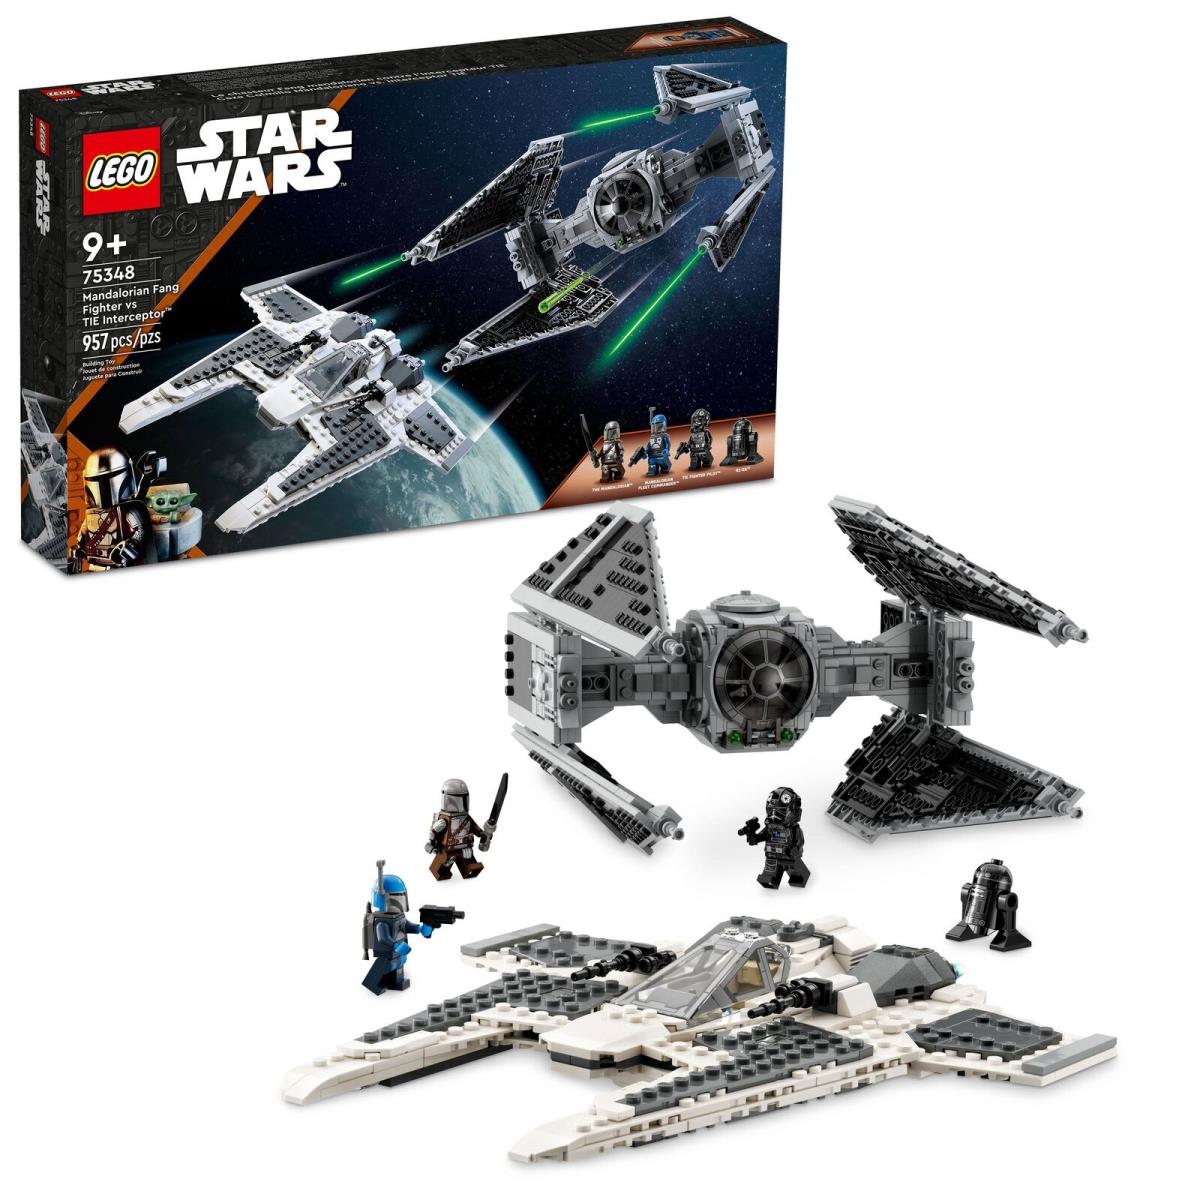 Lego Star Wars Mandalorian Fang Fighter Vs. Tie Interceptor 75348 See Details